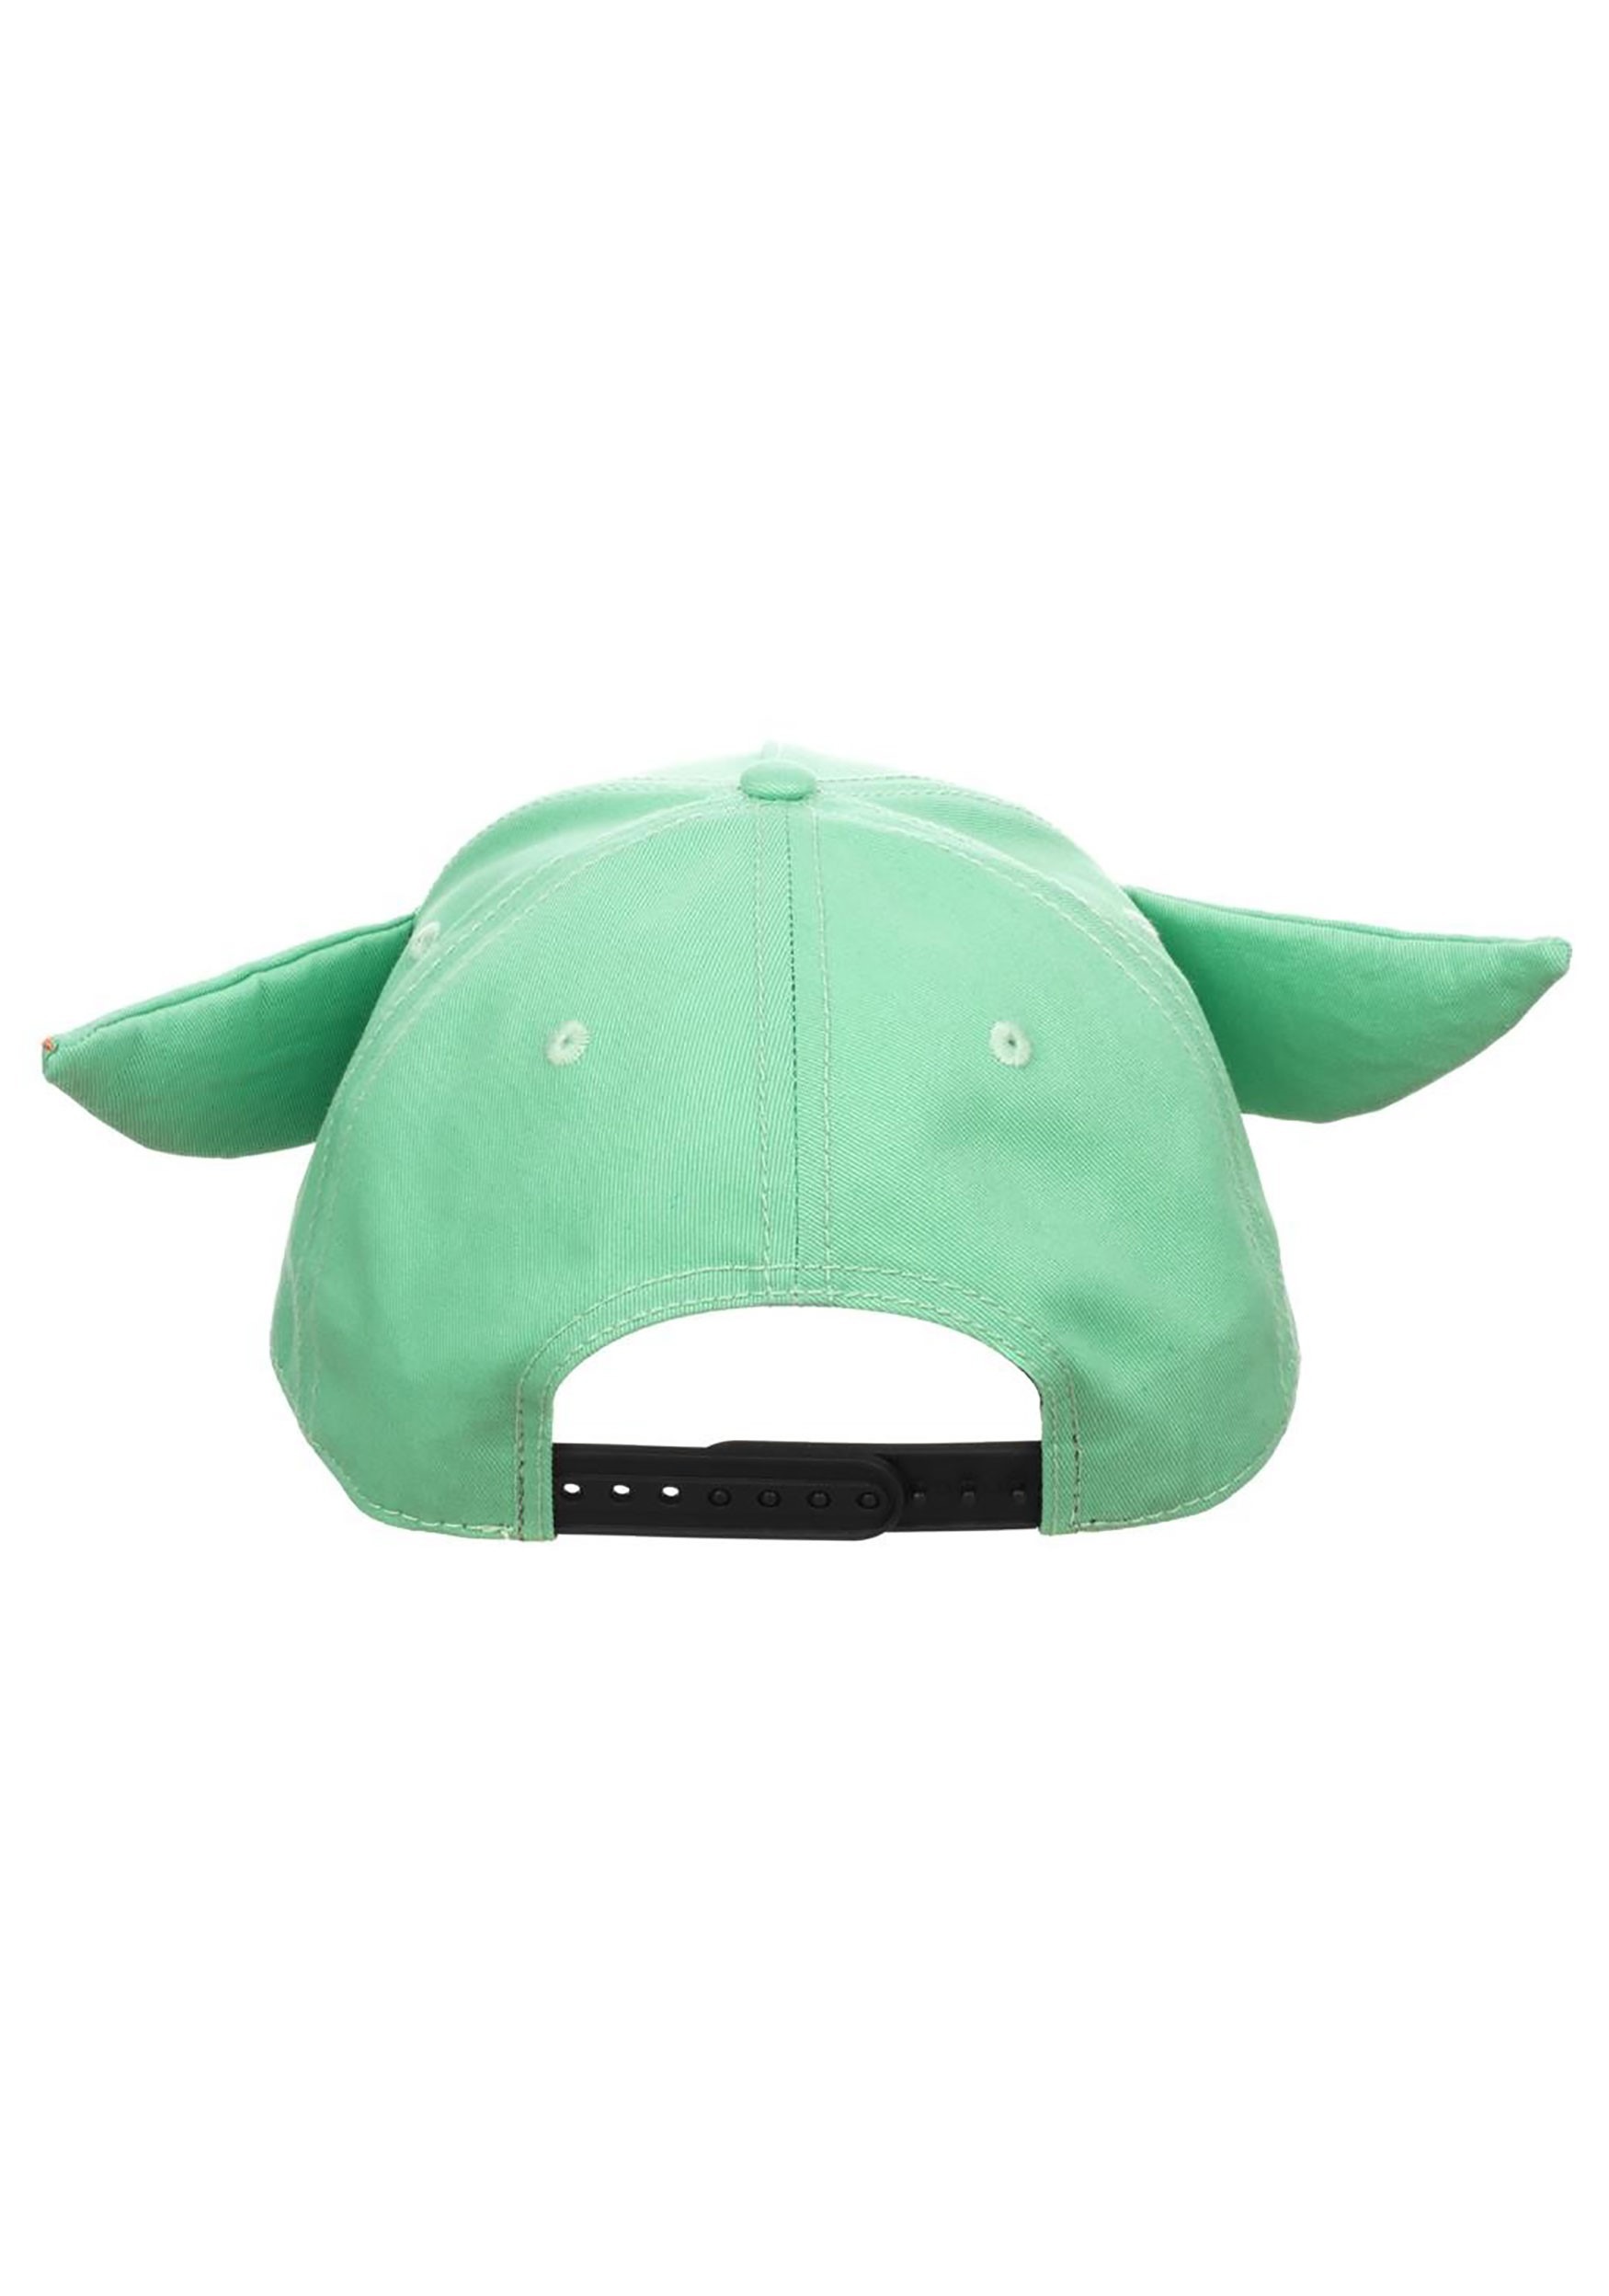 The Child Novelty Star Wars Hat